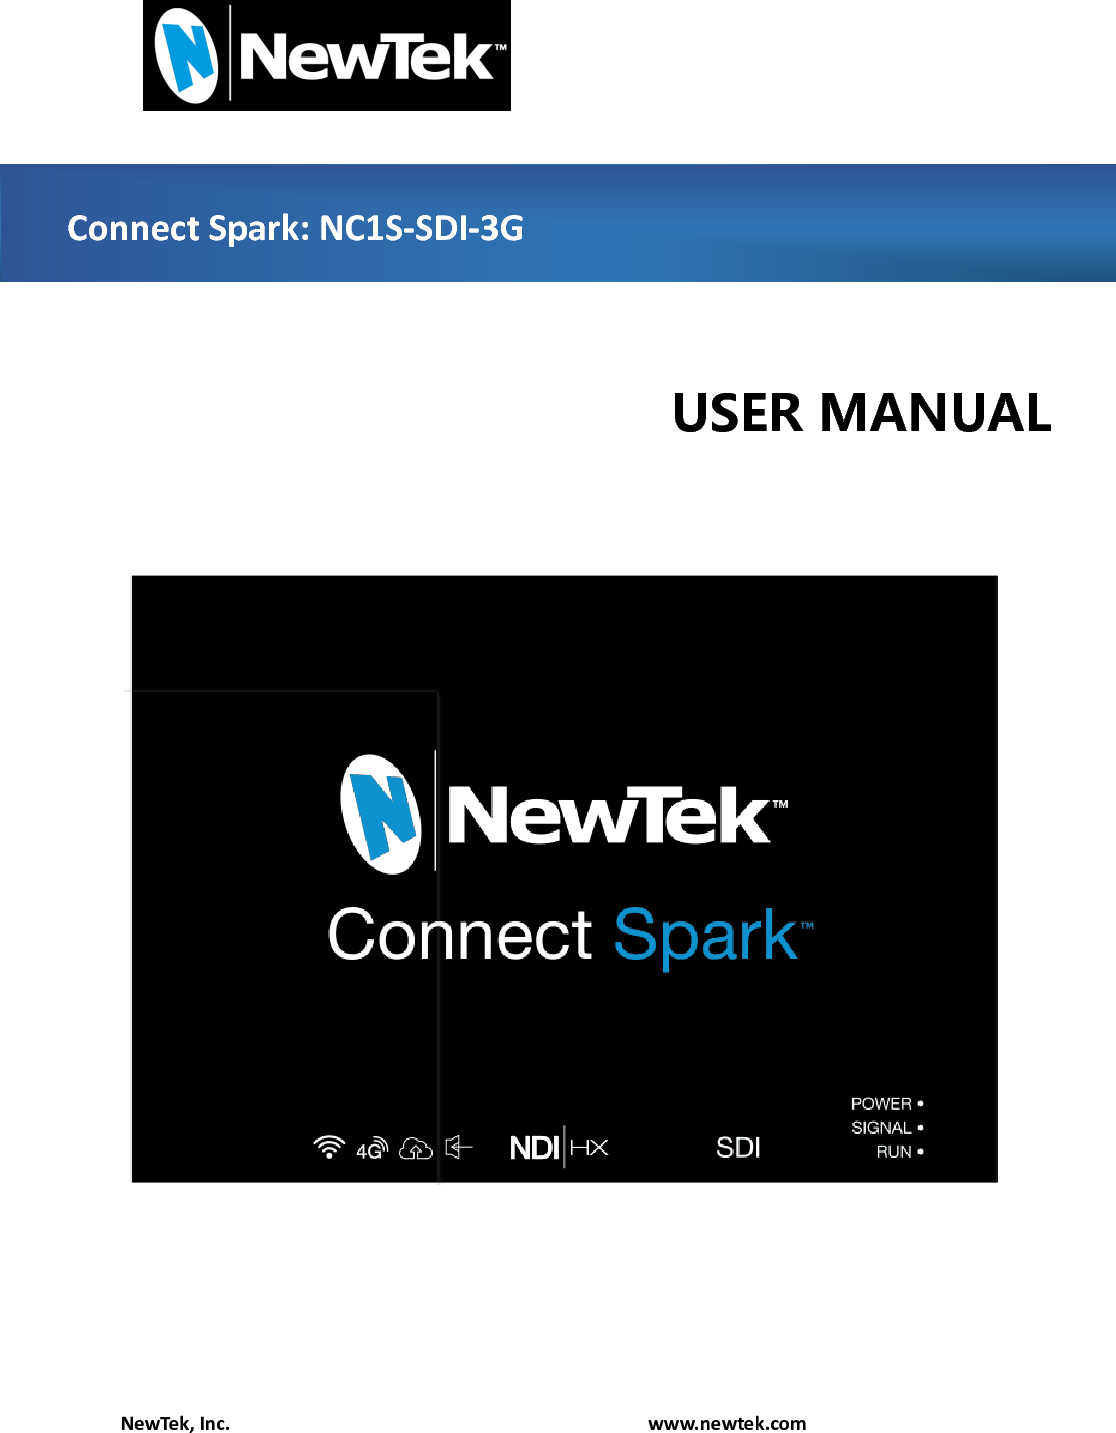  NewTek, Inc.                                                                                www.newtek.com                Connect Spark: NC1S-SDI-3G USER MANUAL 